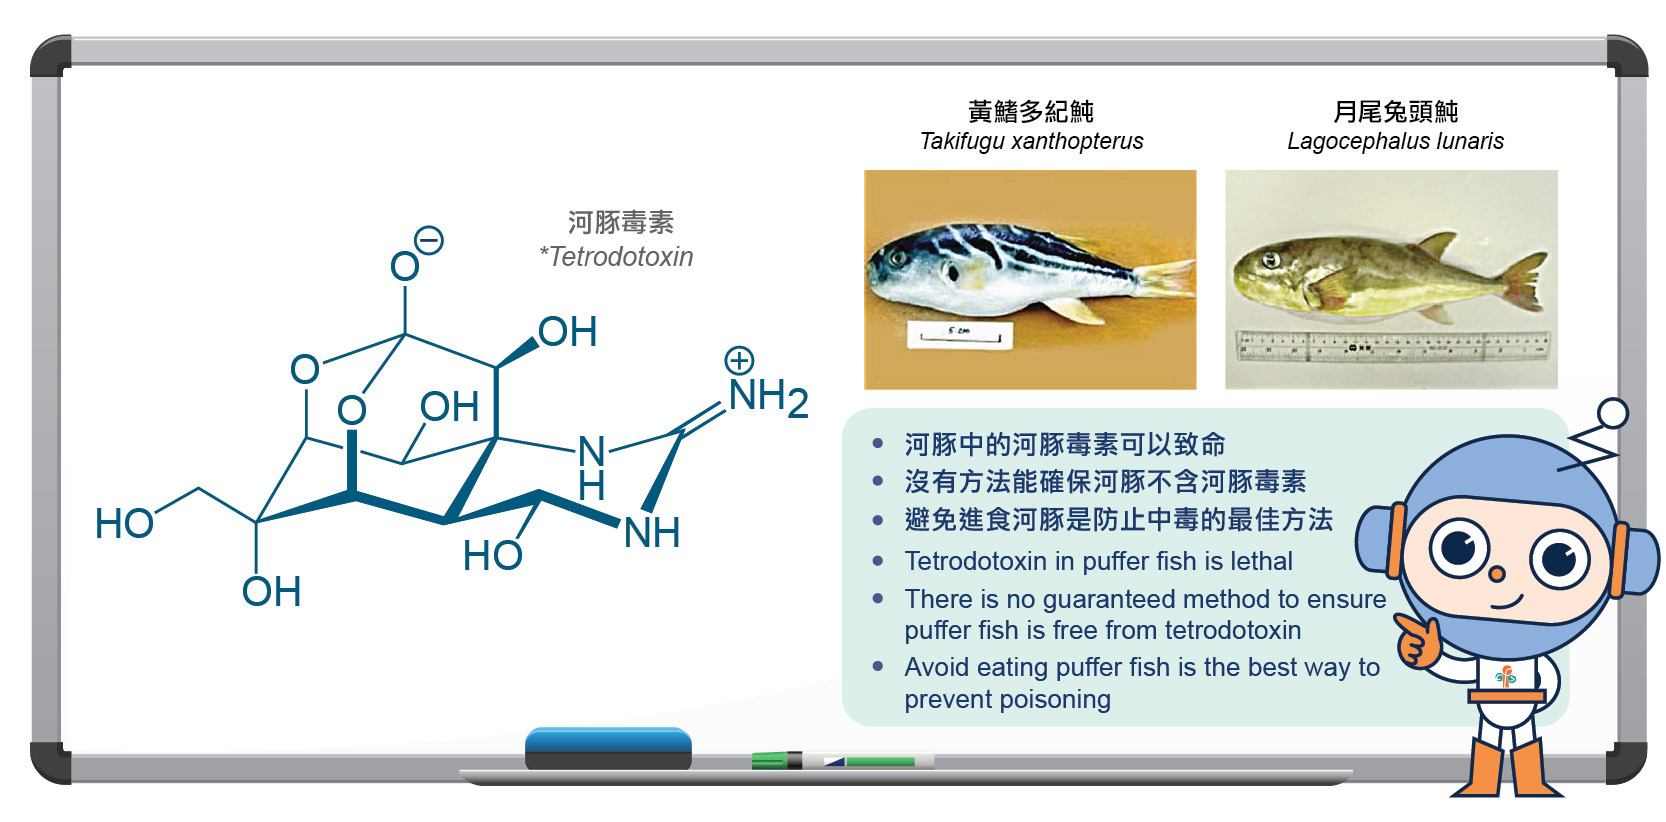 Tetrodotoxin in puffer fish